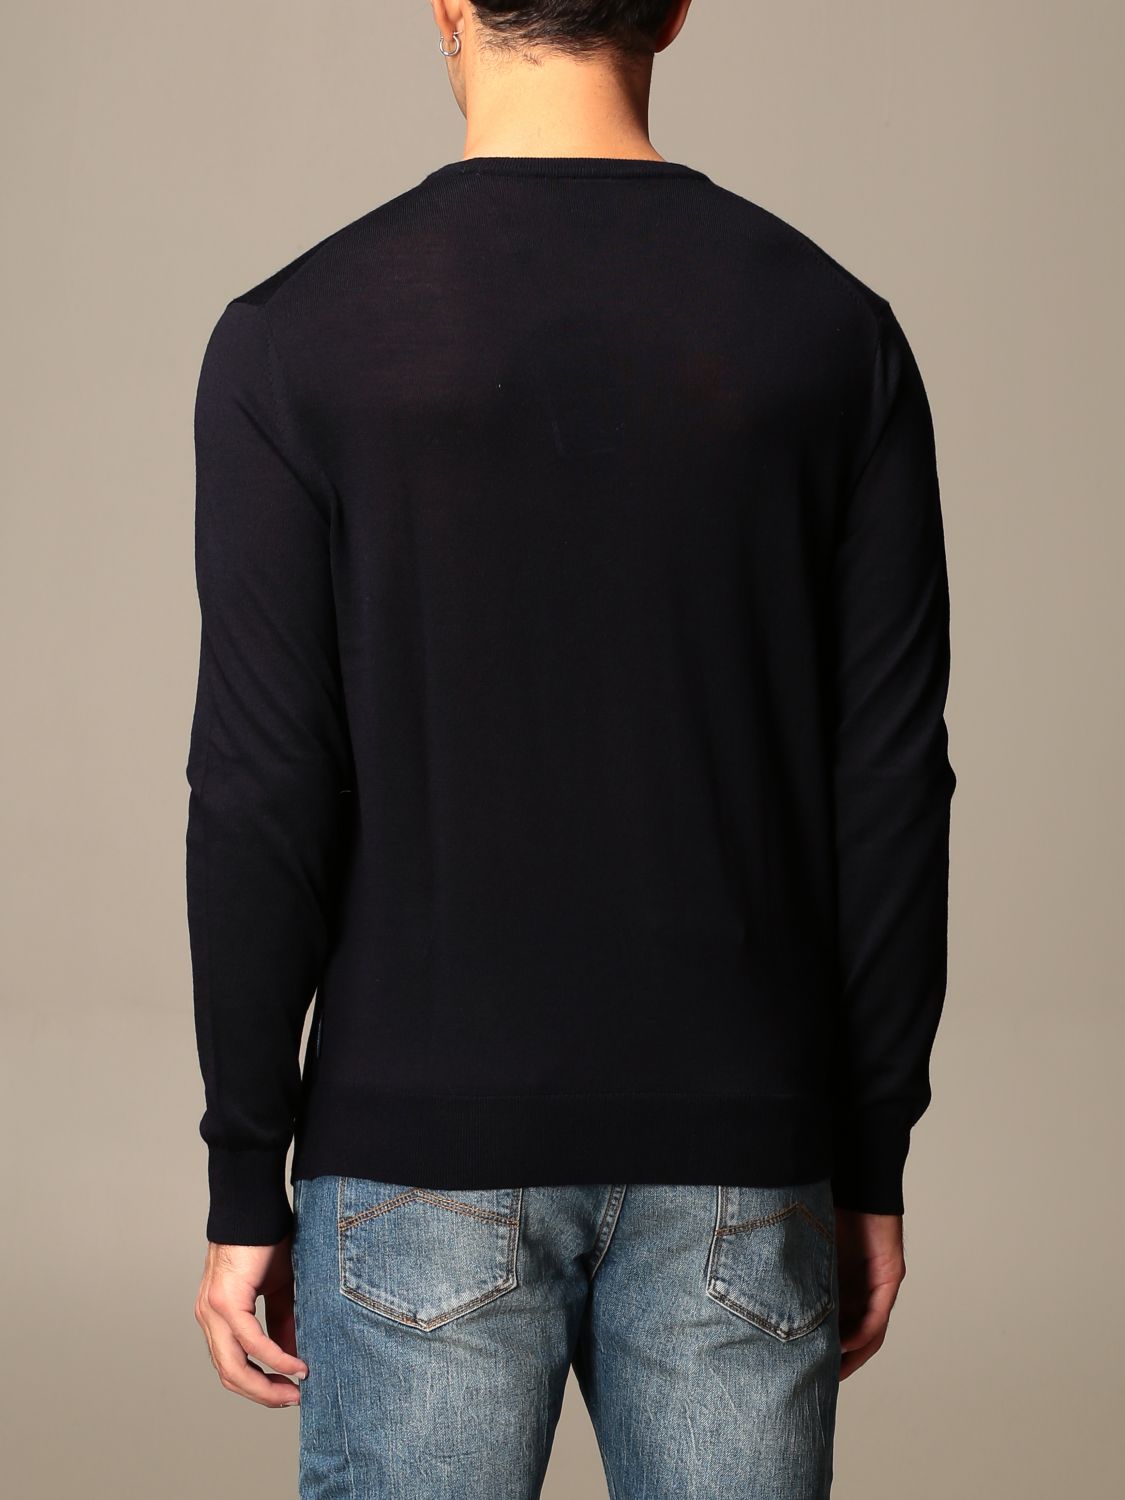 ARMANI EXCHANGE: basic crewneck sweater - Blue | Sweater Armani ...